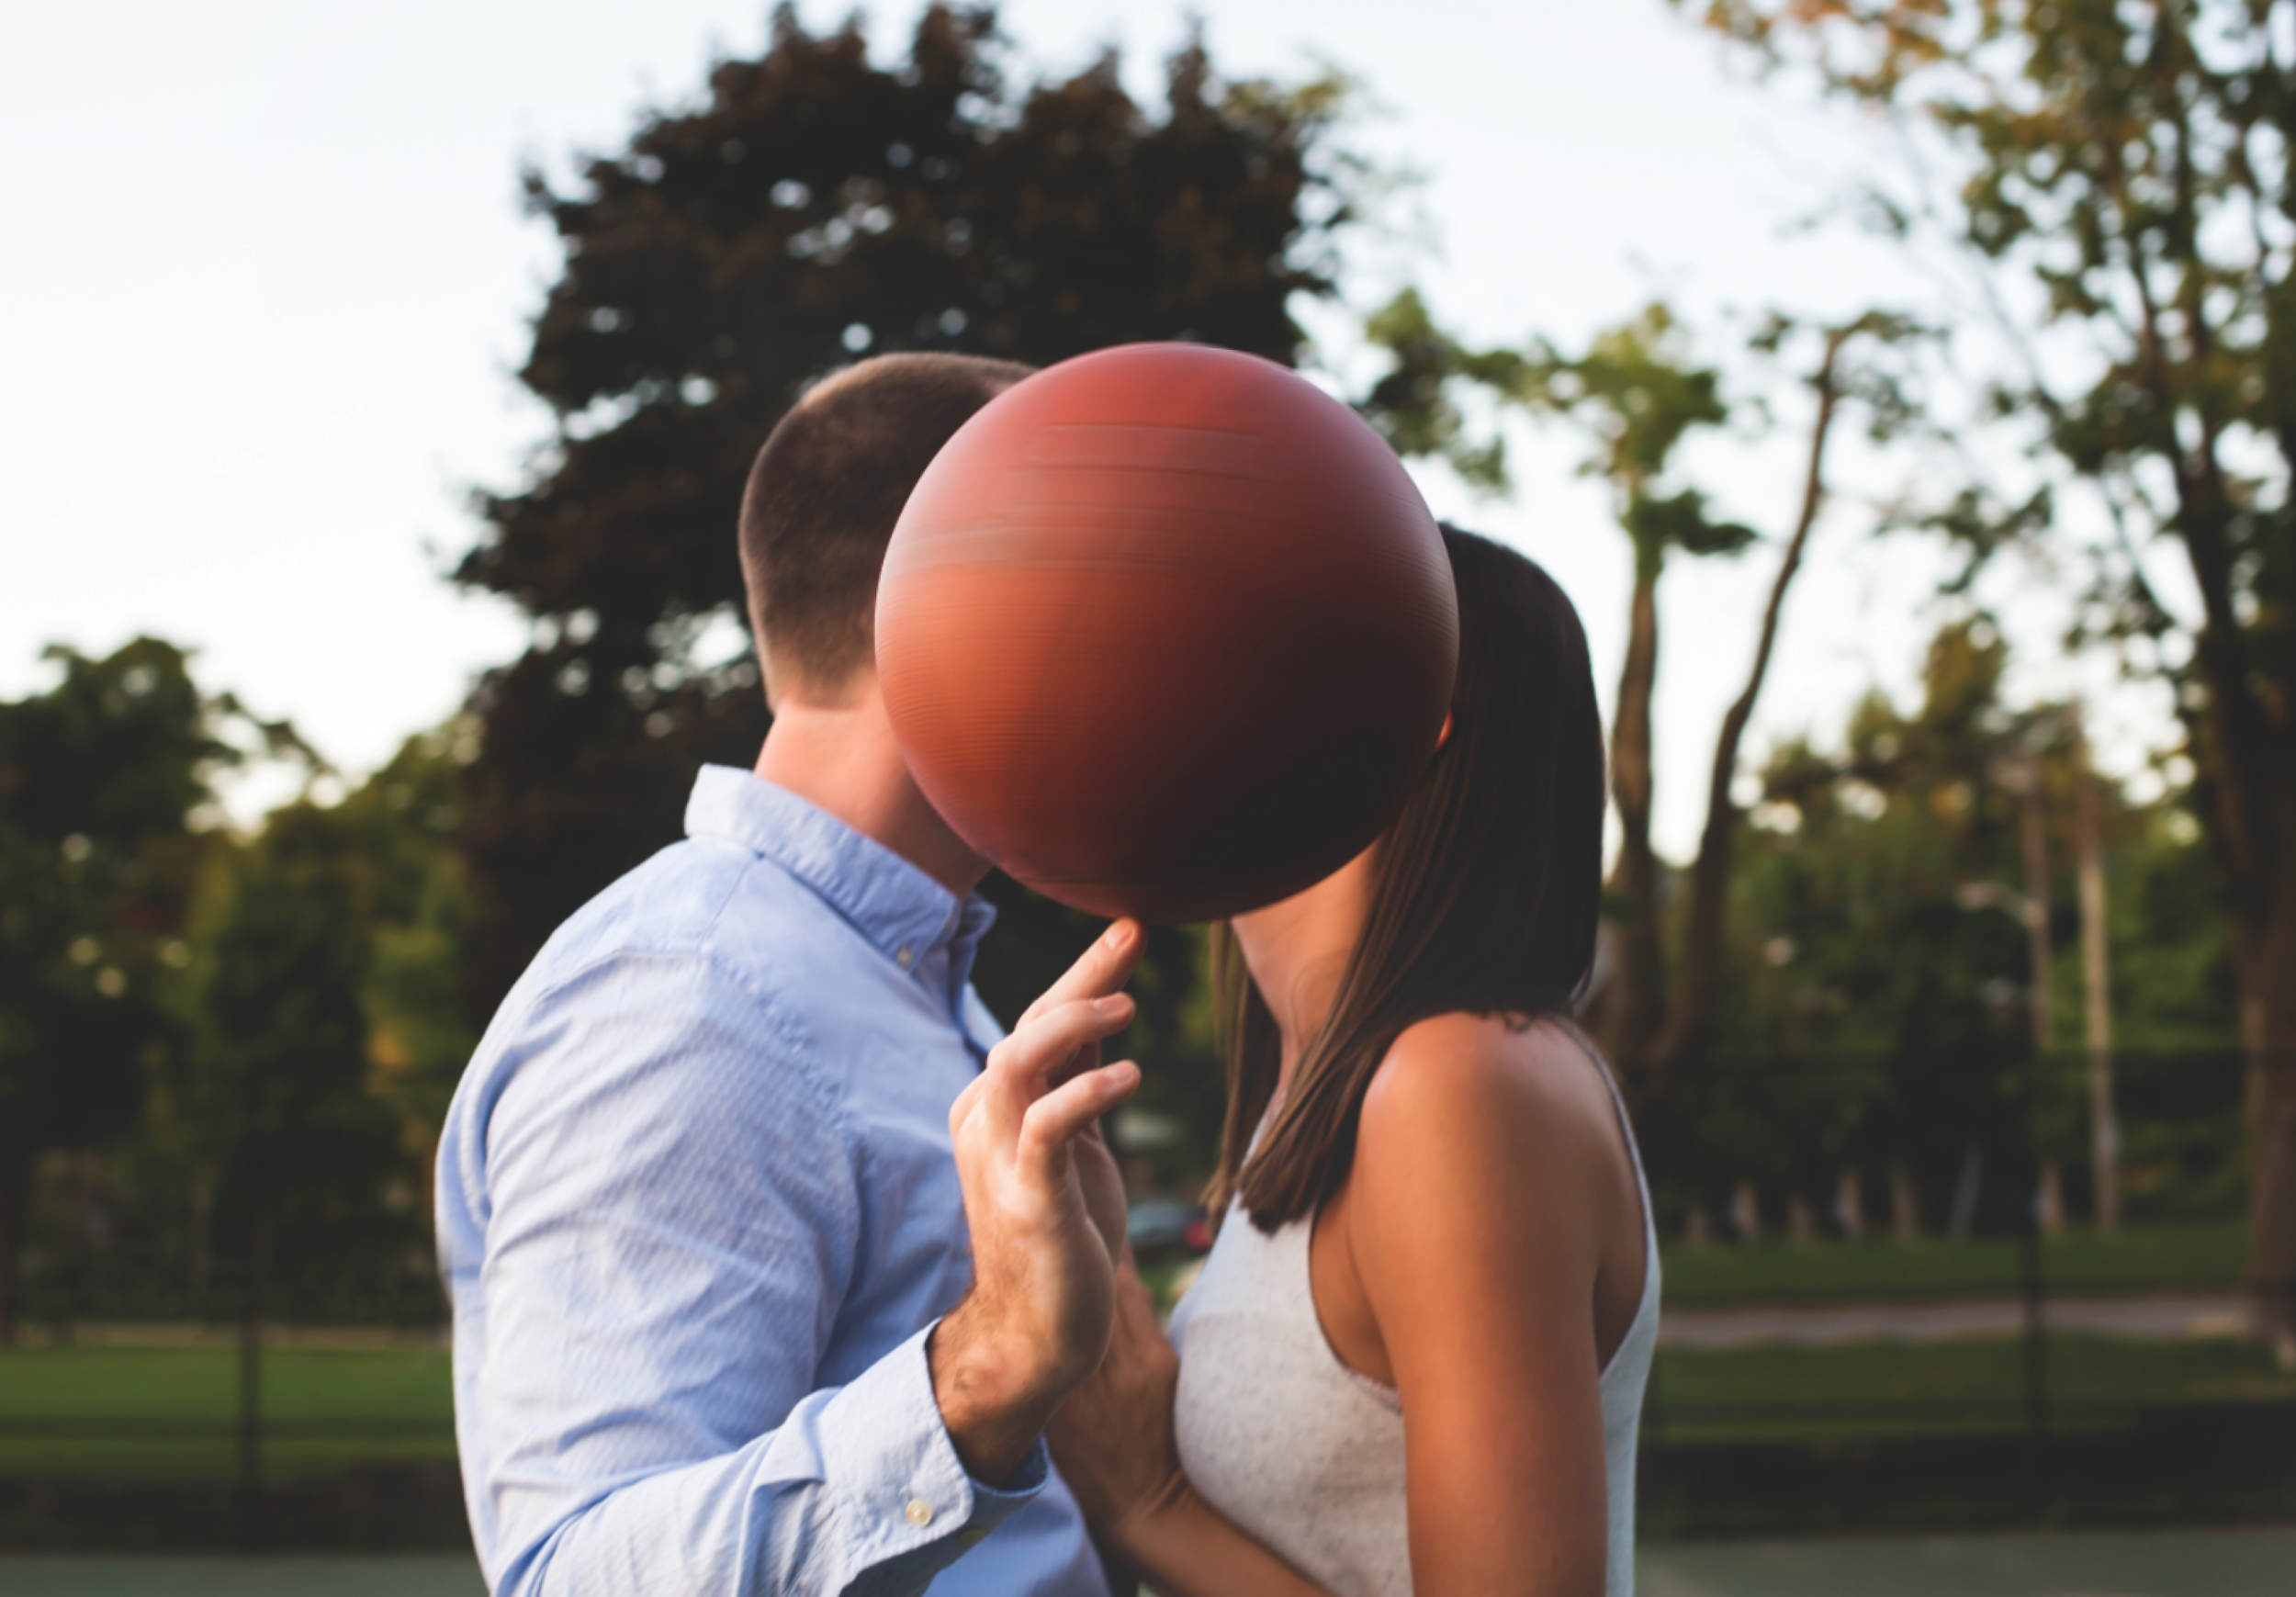 Engagement-Photos-Guelph-Park-Photographer-Wedding-Hamilton-GTA-Niagara-Oakville-Guelph-Tennis-Court-Basketball-Modern-Moments-by-Lauren-Engaged-Photography-Photo-Image-10.png